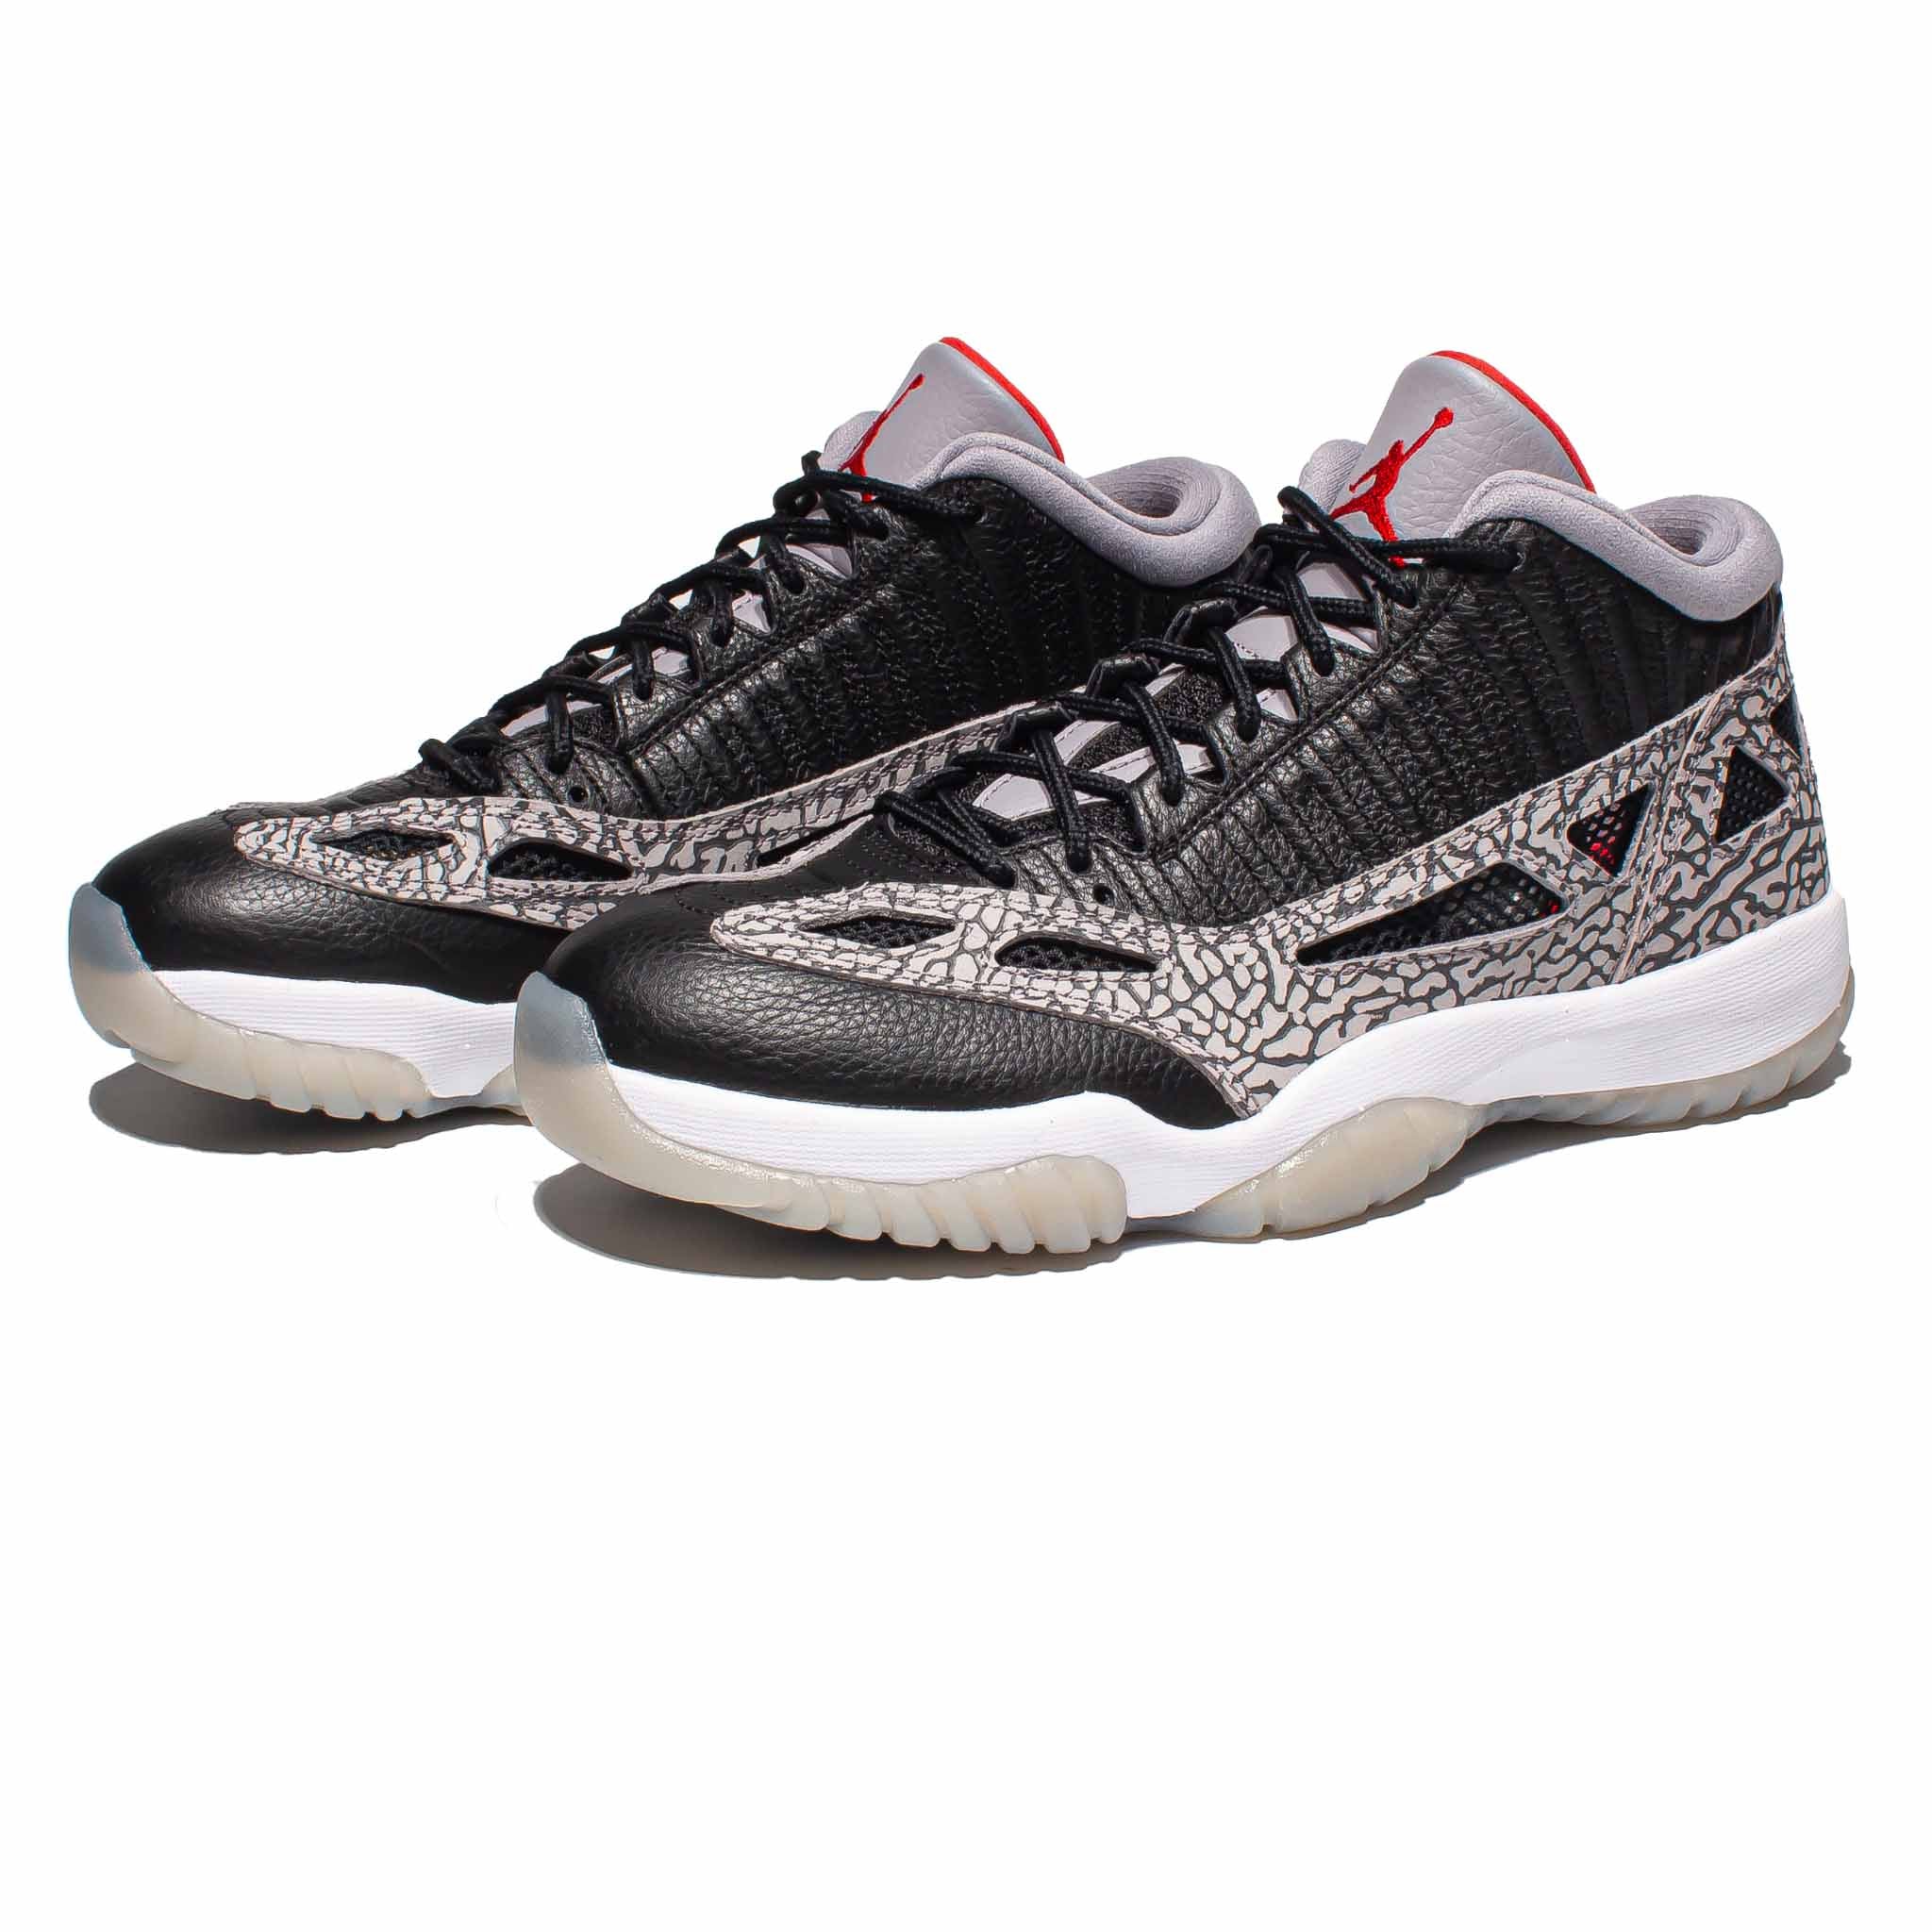 Jordan 11 Retro Low IE Black Cement Men's - 919712-006 - US